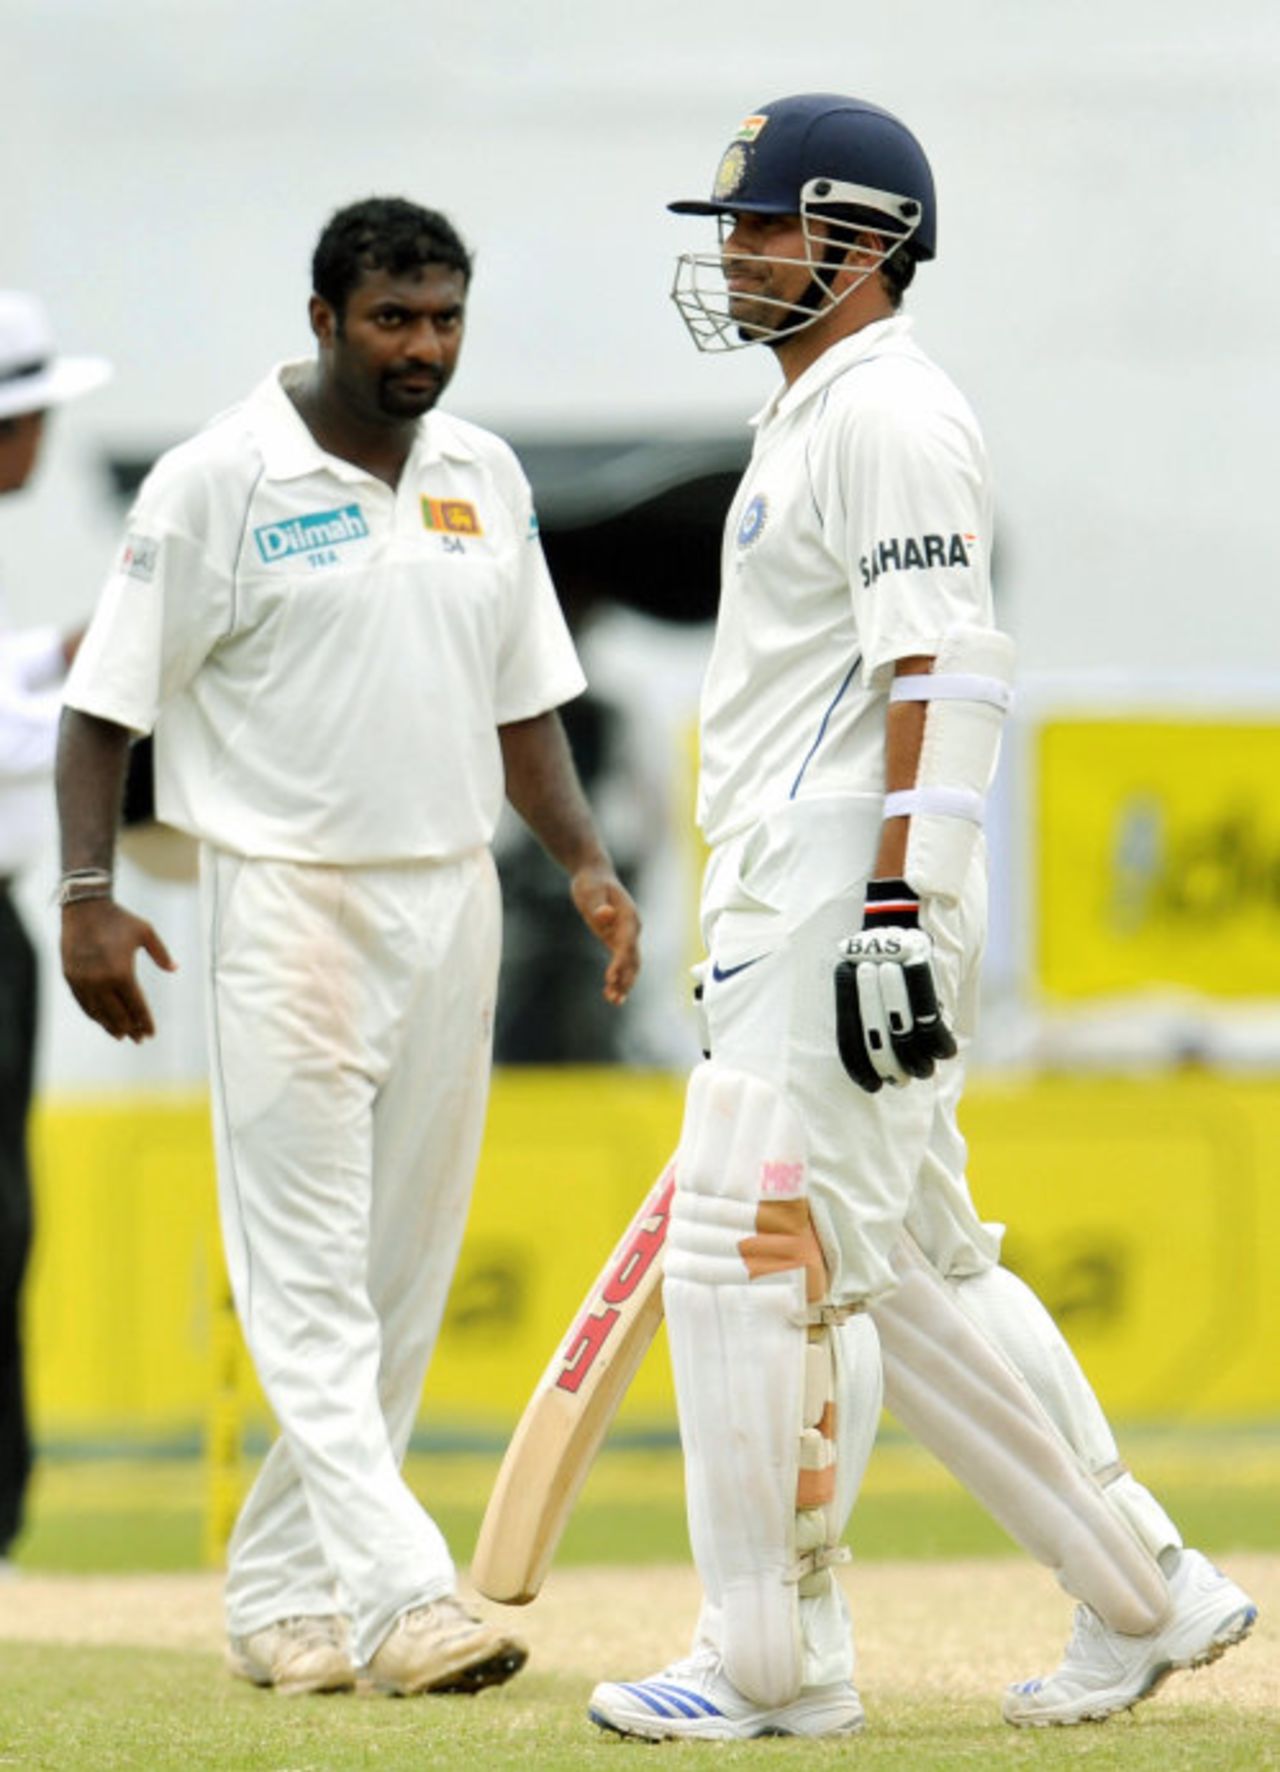 Muttiah Muralitharan and Sachin Tendulkar wait for the umpire's review of a bat-pad chance, Sri Lanka v India, 1st Test, SSC, Colombo, 4th day, July 26, 2008